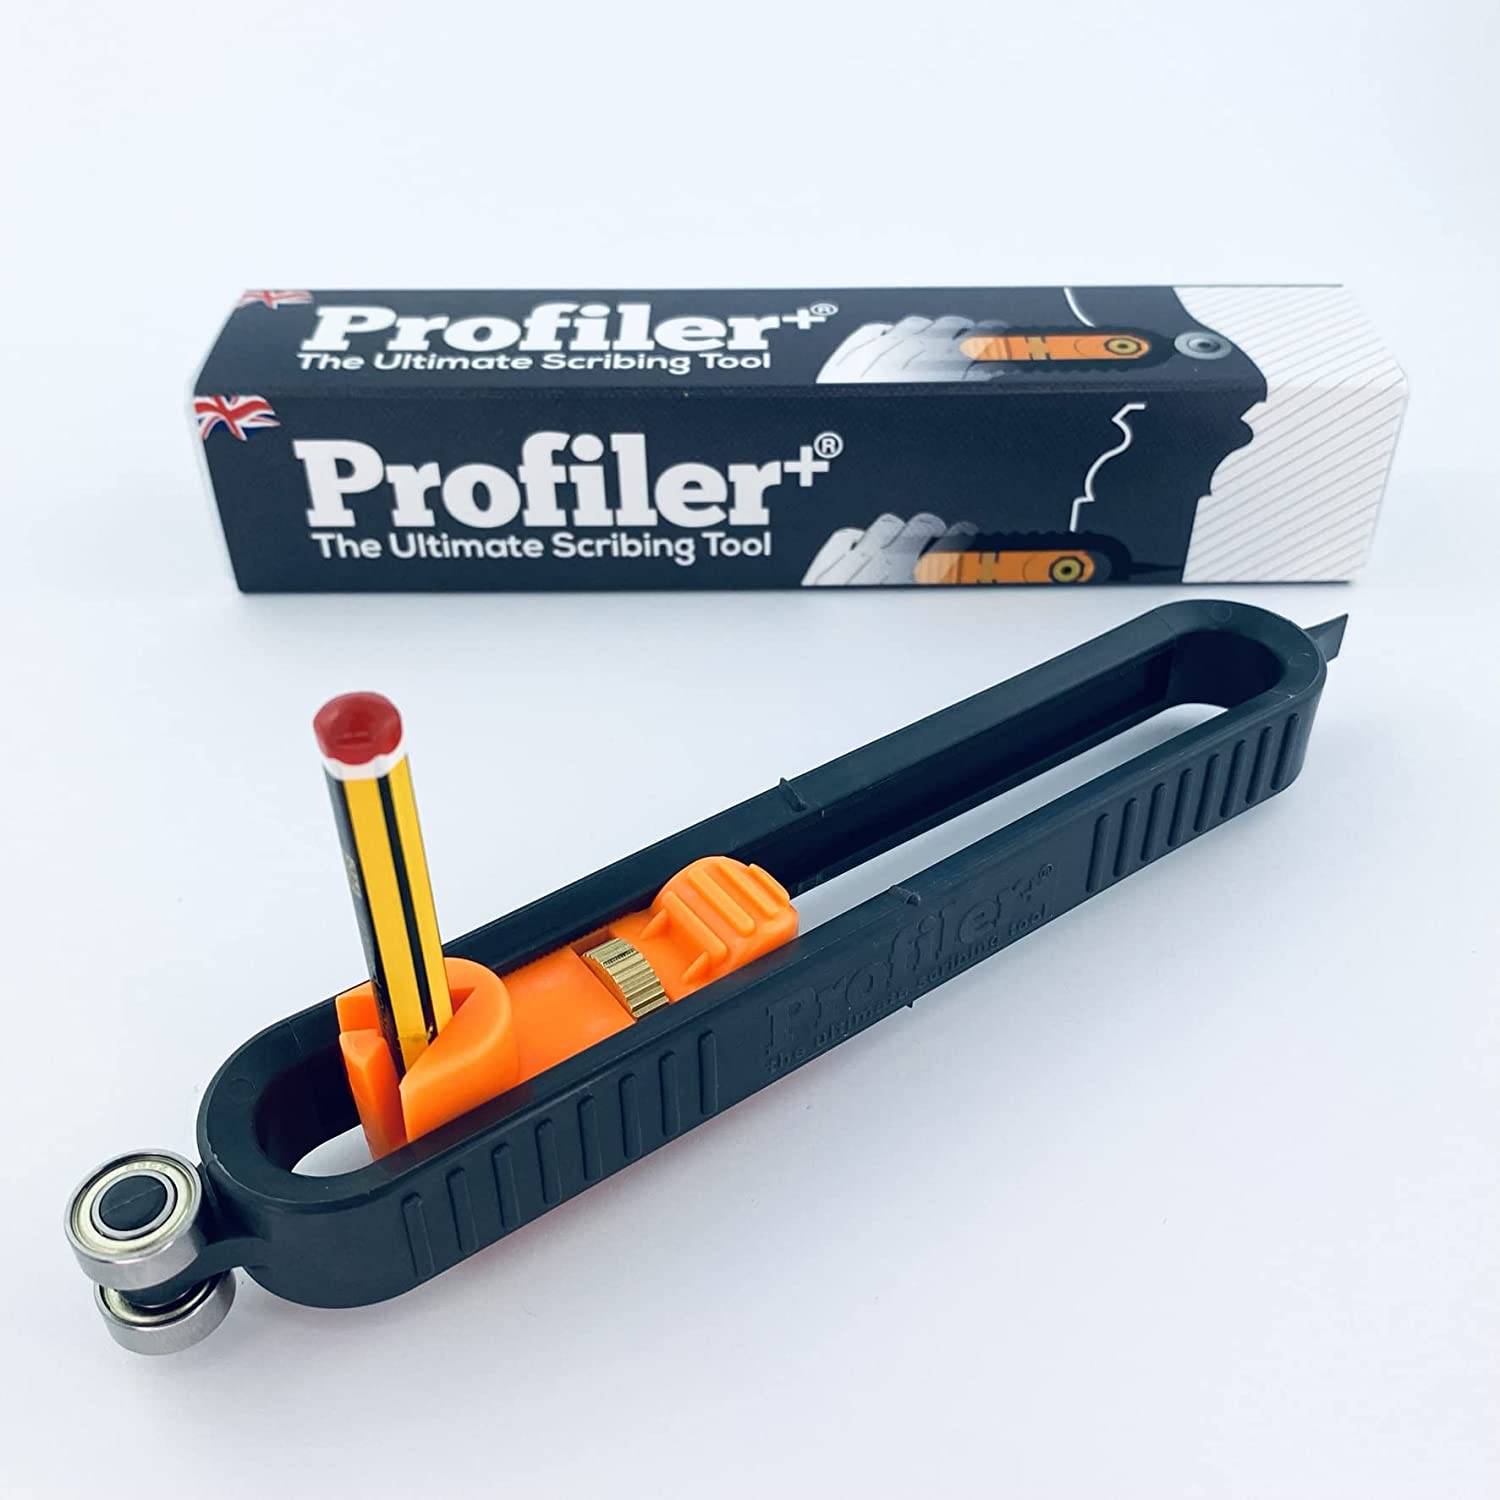 Profiler+ - The Ultimate Scribing Tool